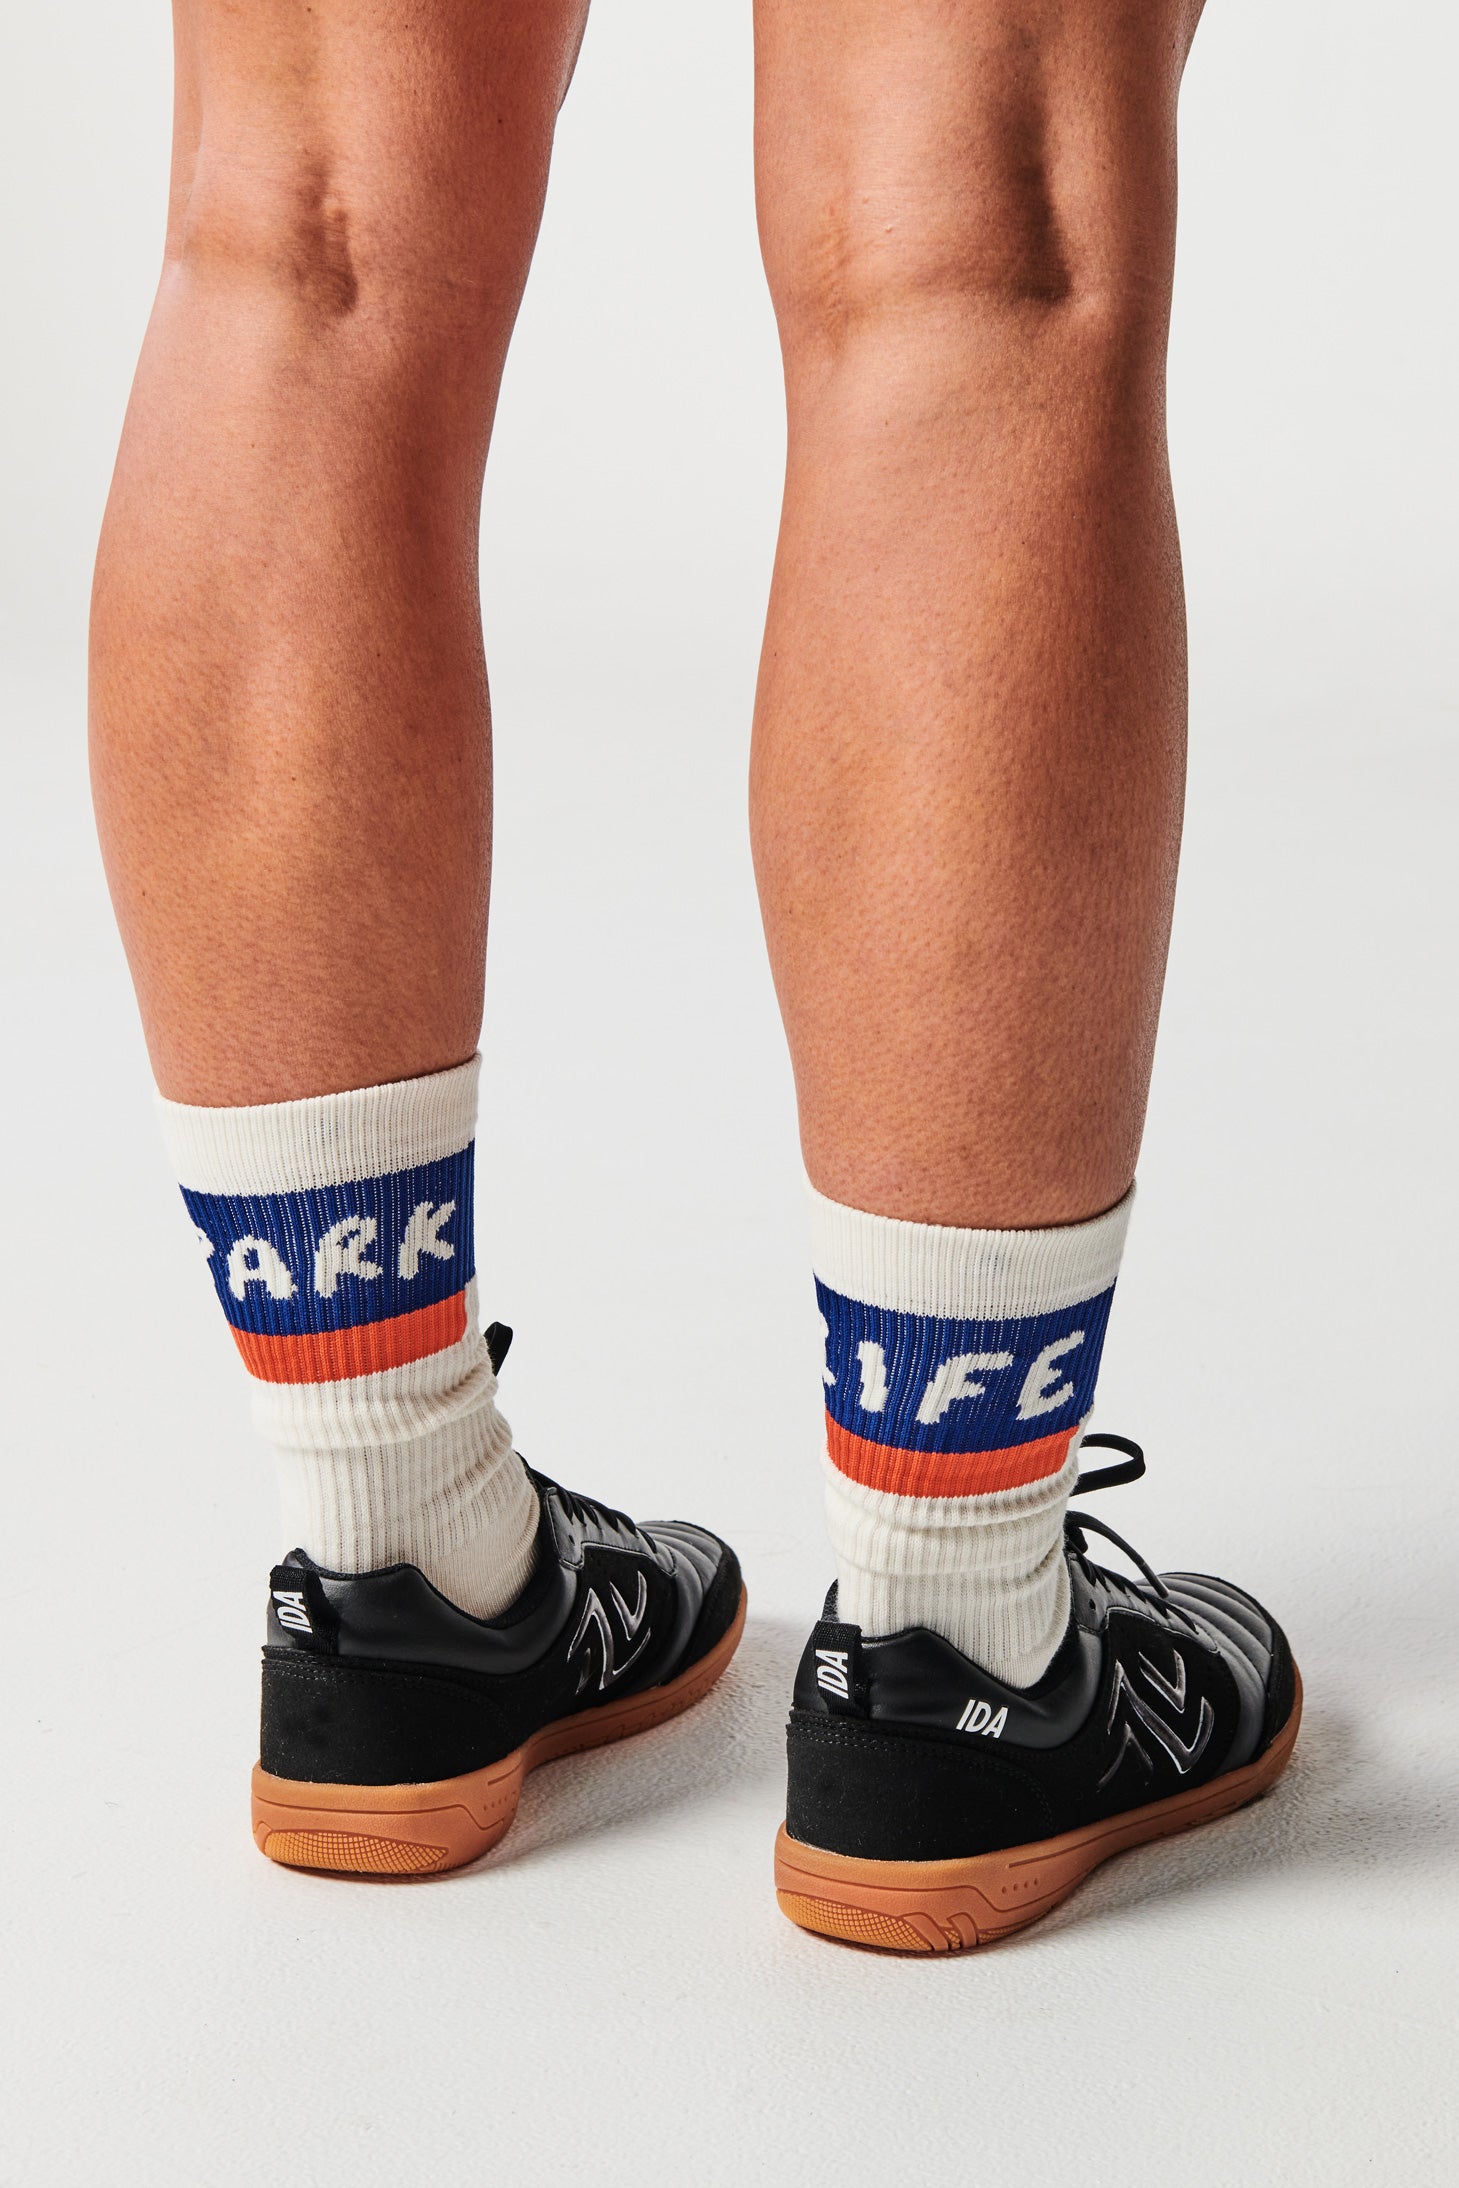 Arc Training Socks